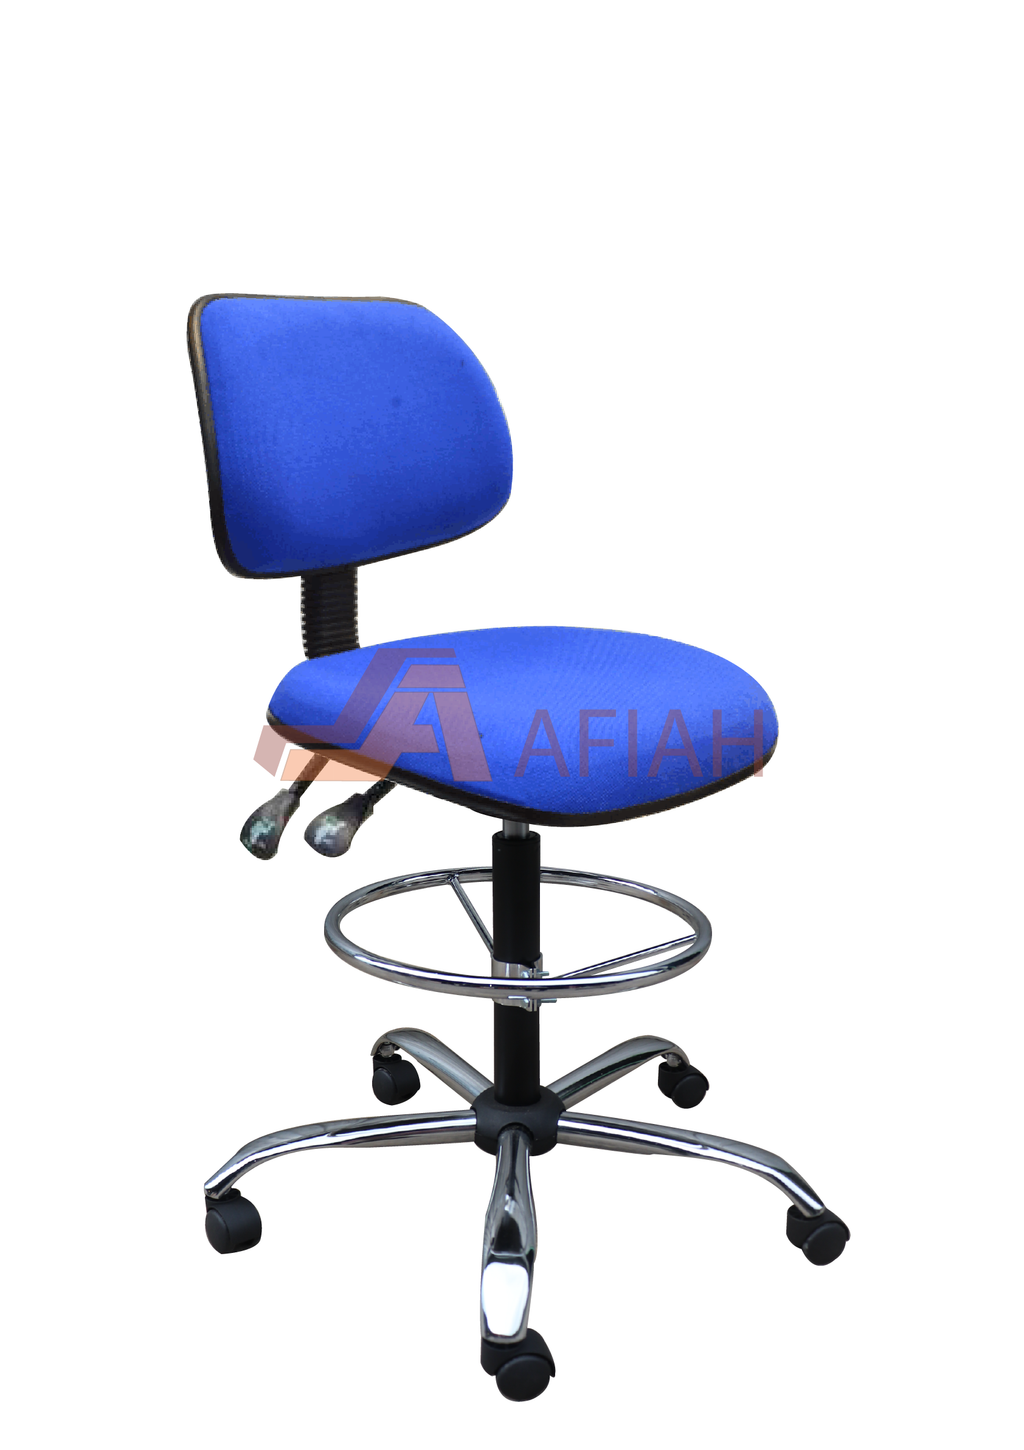 Drafting Chair - Afia Manufacturing Sdn Bhd, Afiah Trading Company